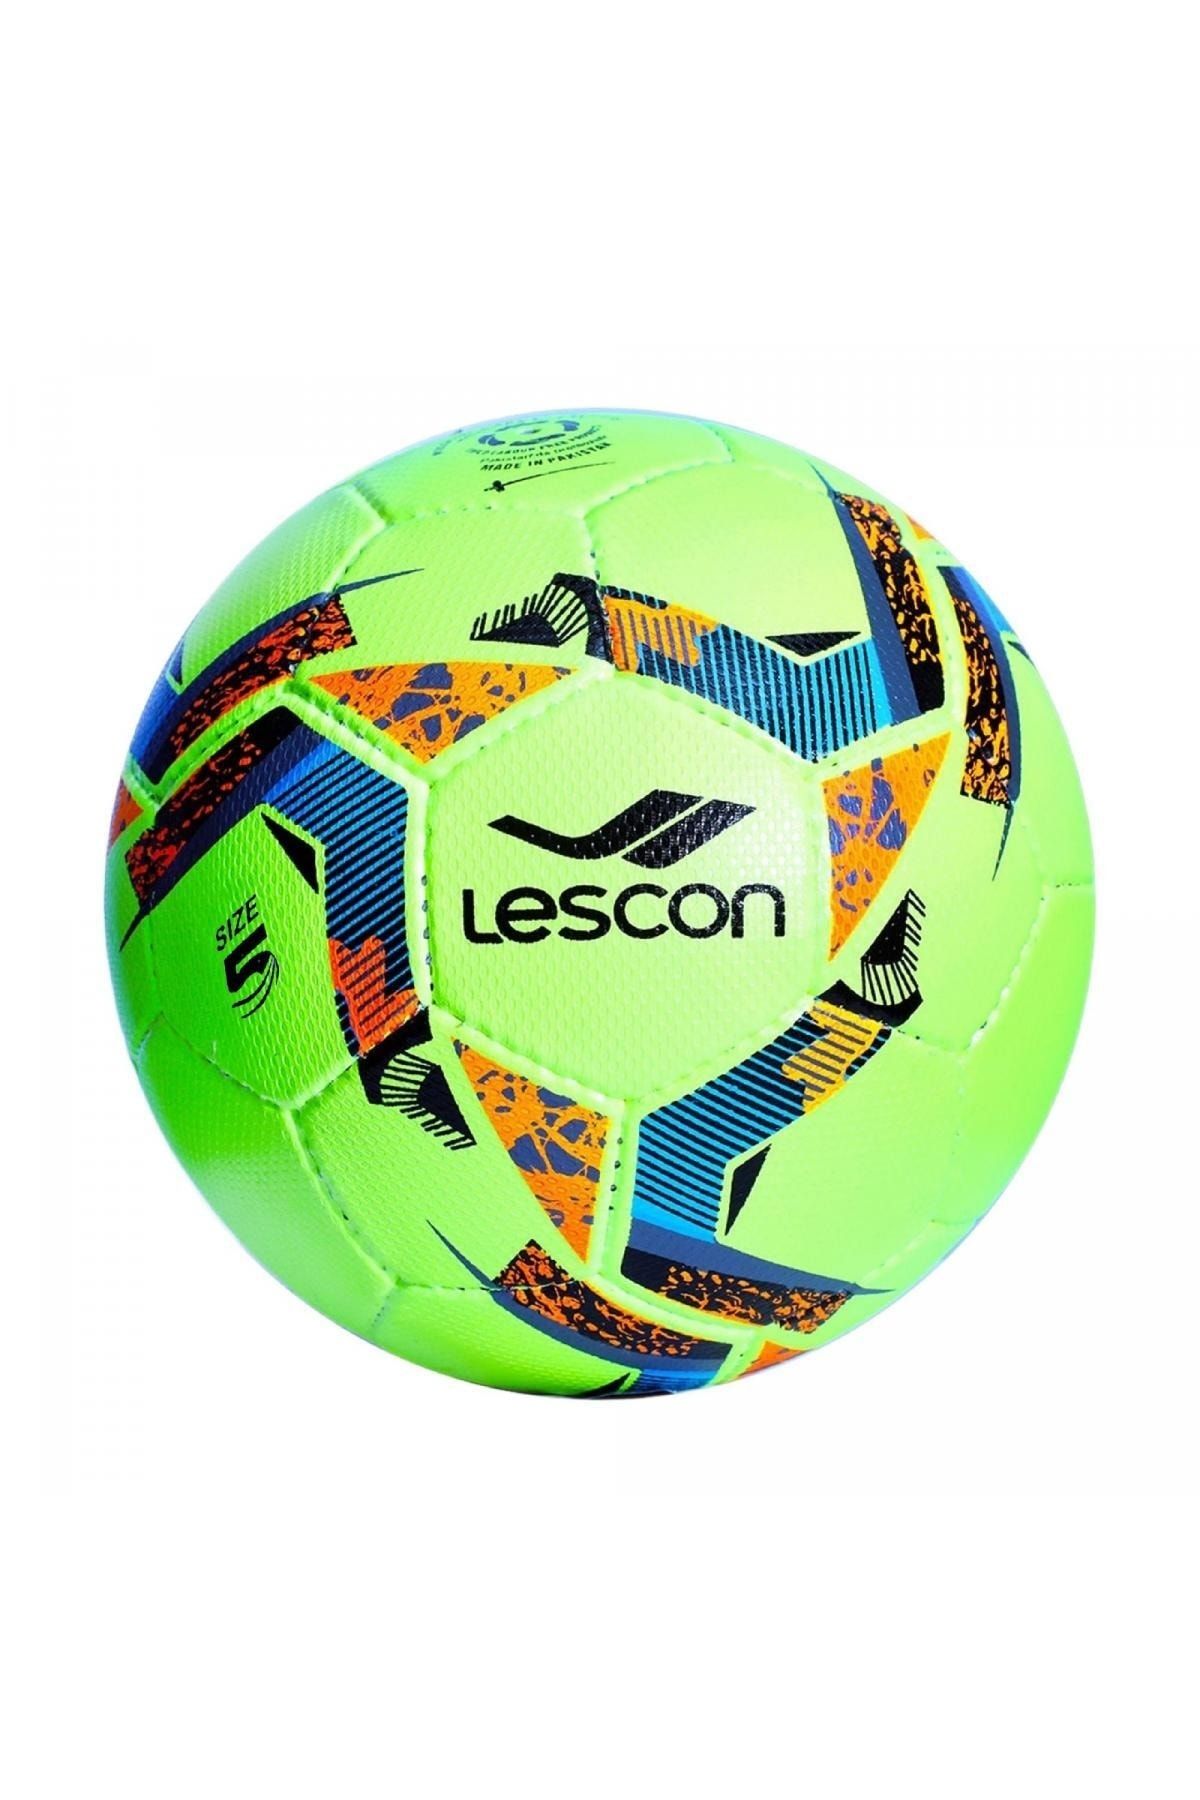 Lescon La-3533 22yksk013533 No 5 Futbol Topu X Spor Malzemeleri